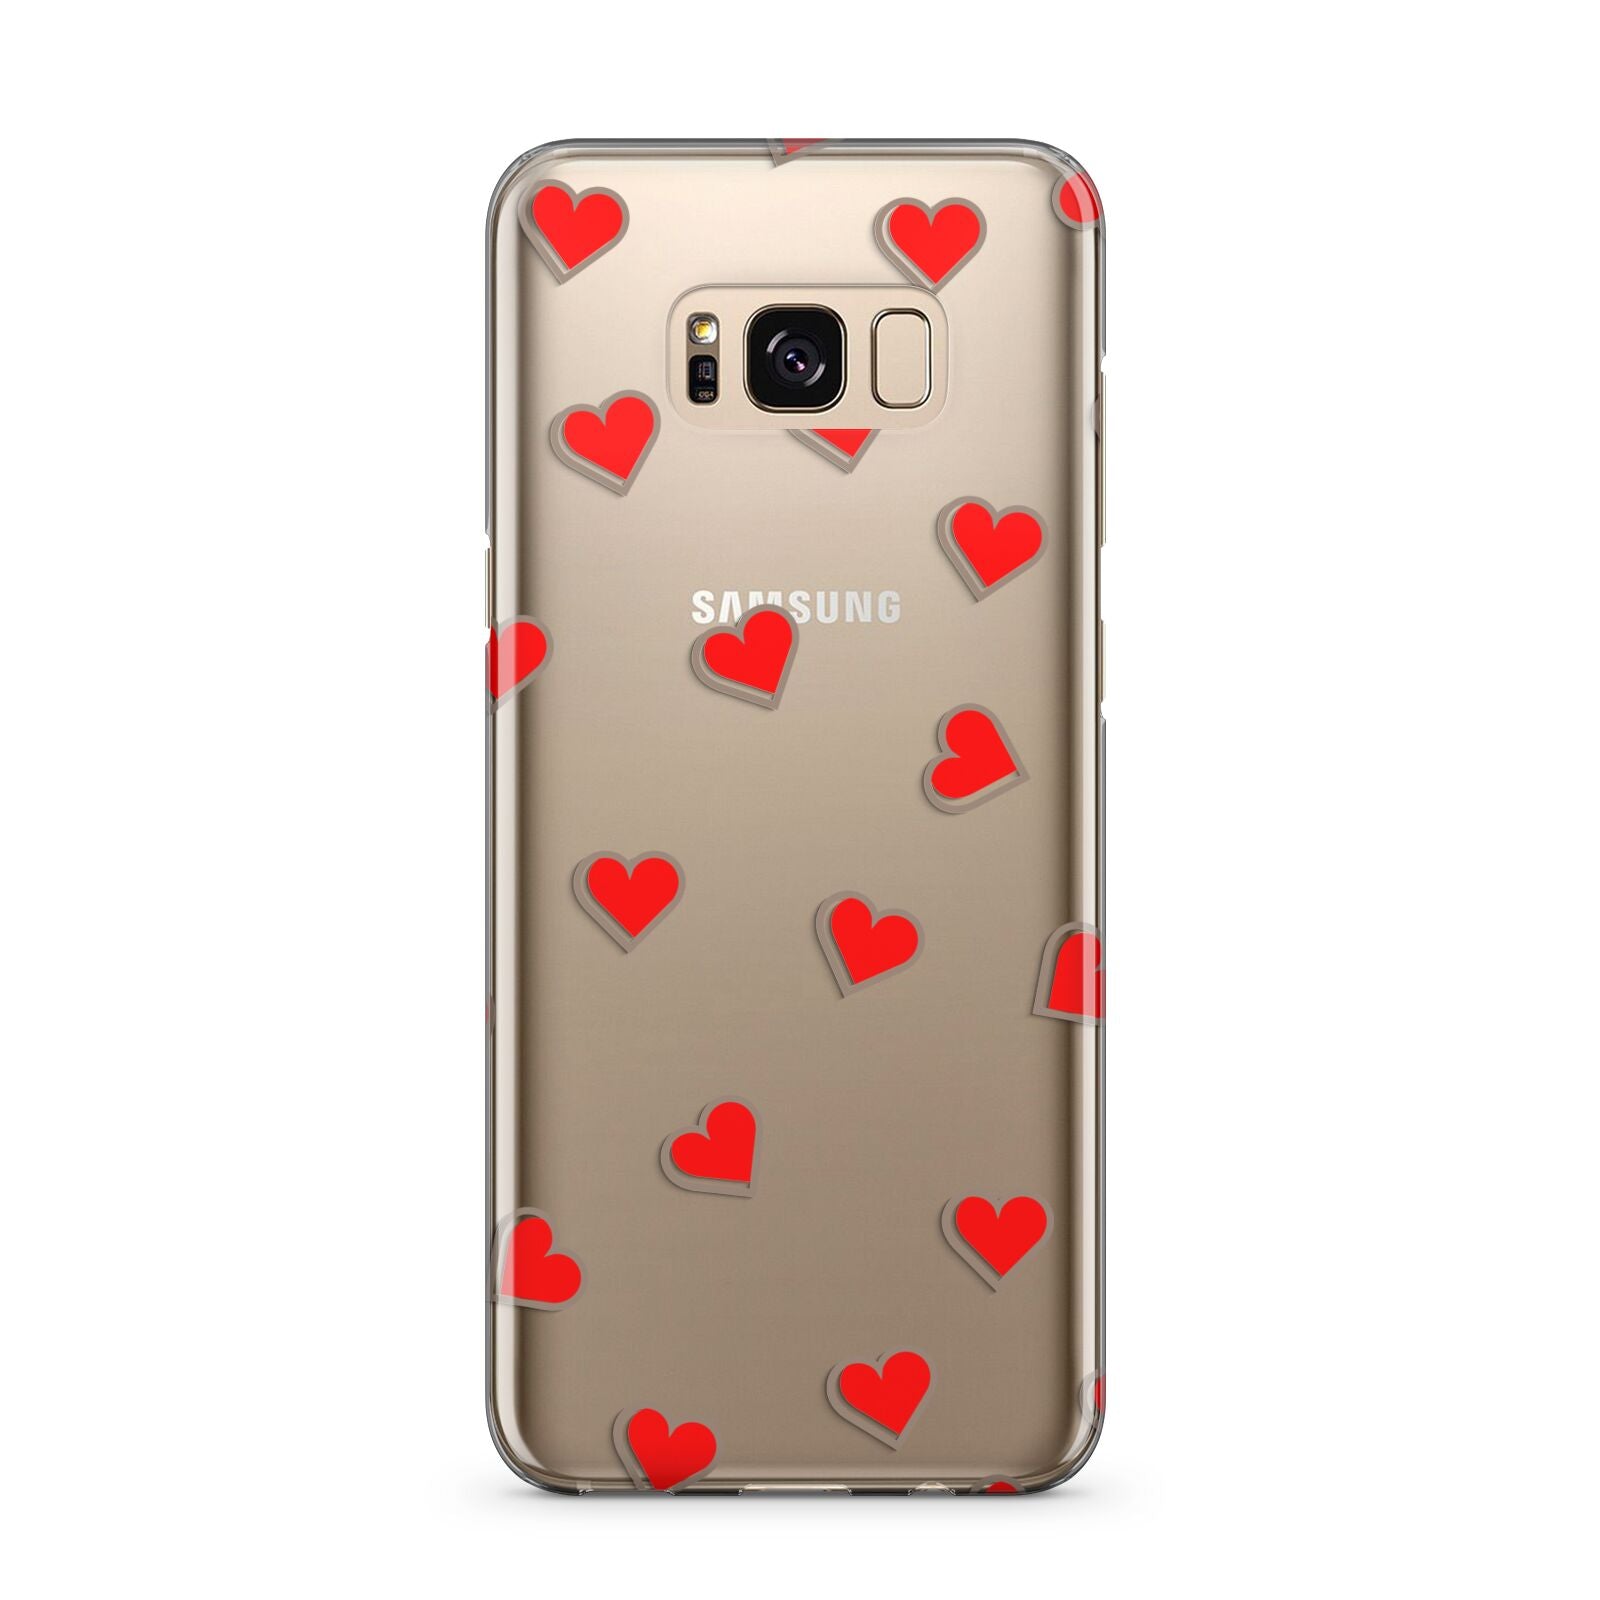 Cute Red Hearts Samsung Galaxy S8 Plus Case